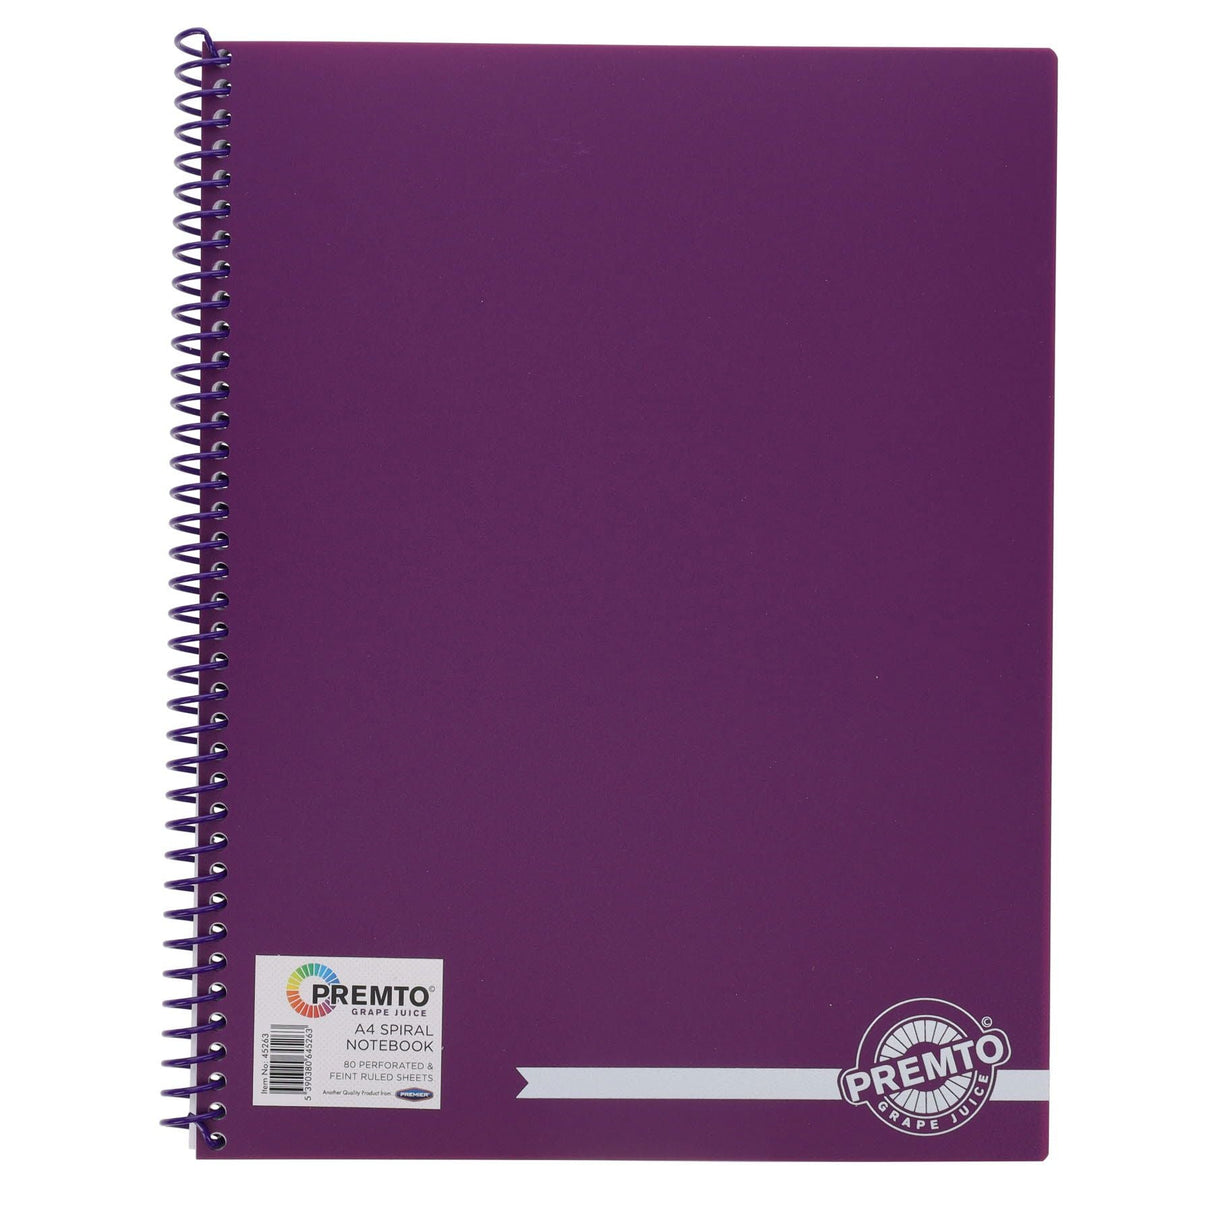 Premto A4 Spiral Notebook PP - 160 Pages - Grape Juice | Stationery Shop UK